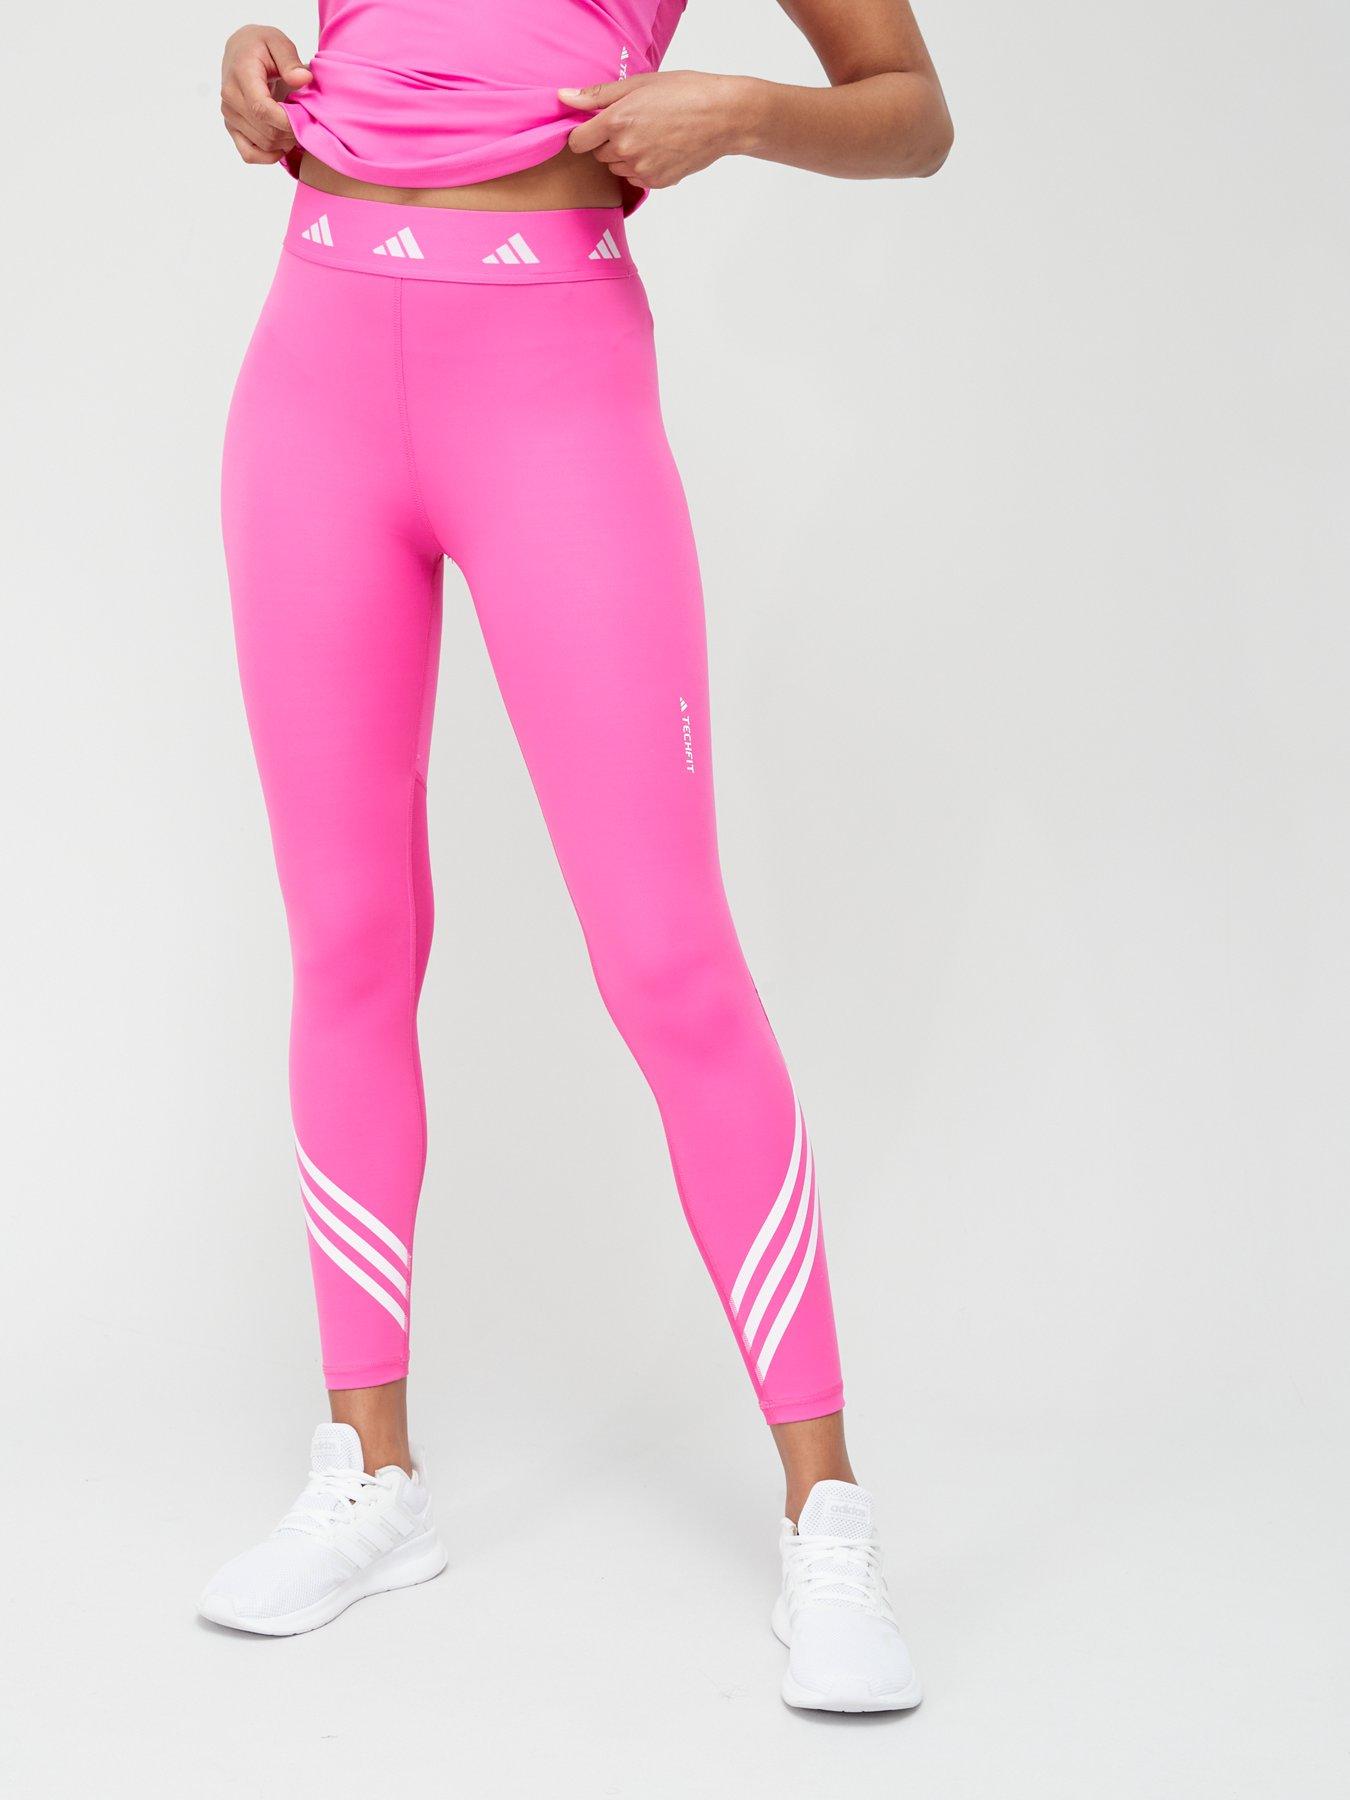 Manchester United adidas adidas Aeroknit 7/8 Sports Leggings - Pink Strata  - Womens